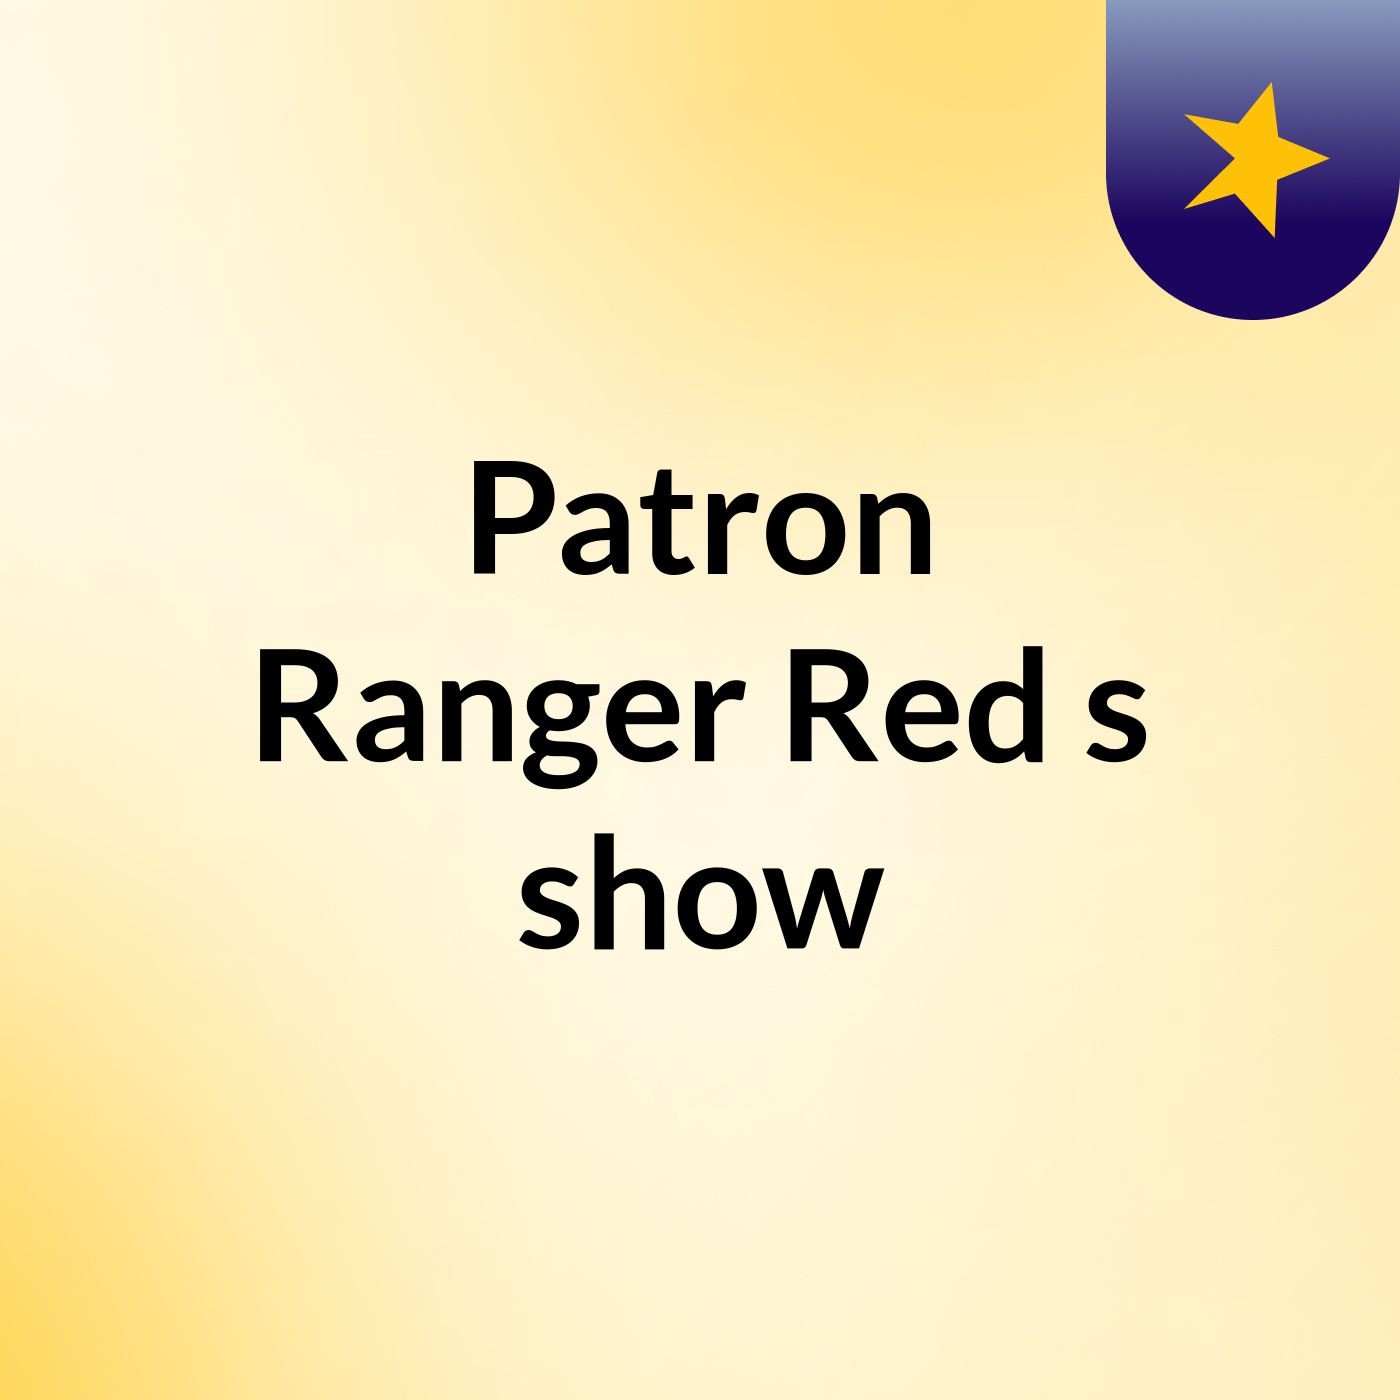 Patron Ranger Red's show